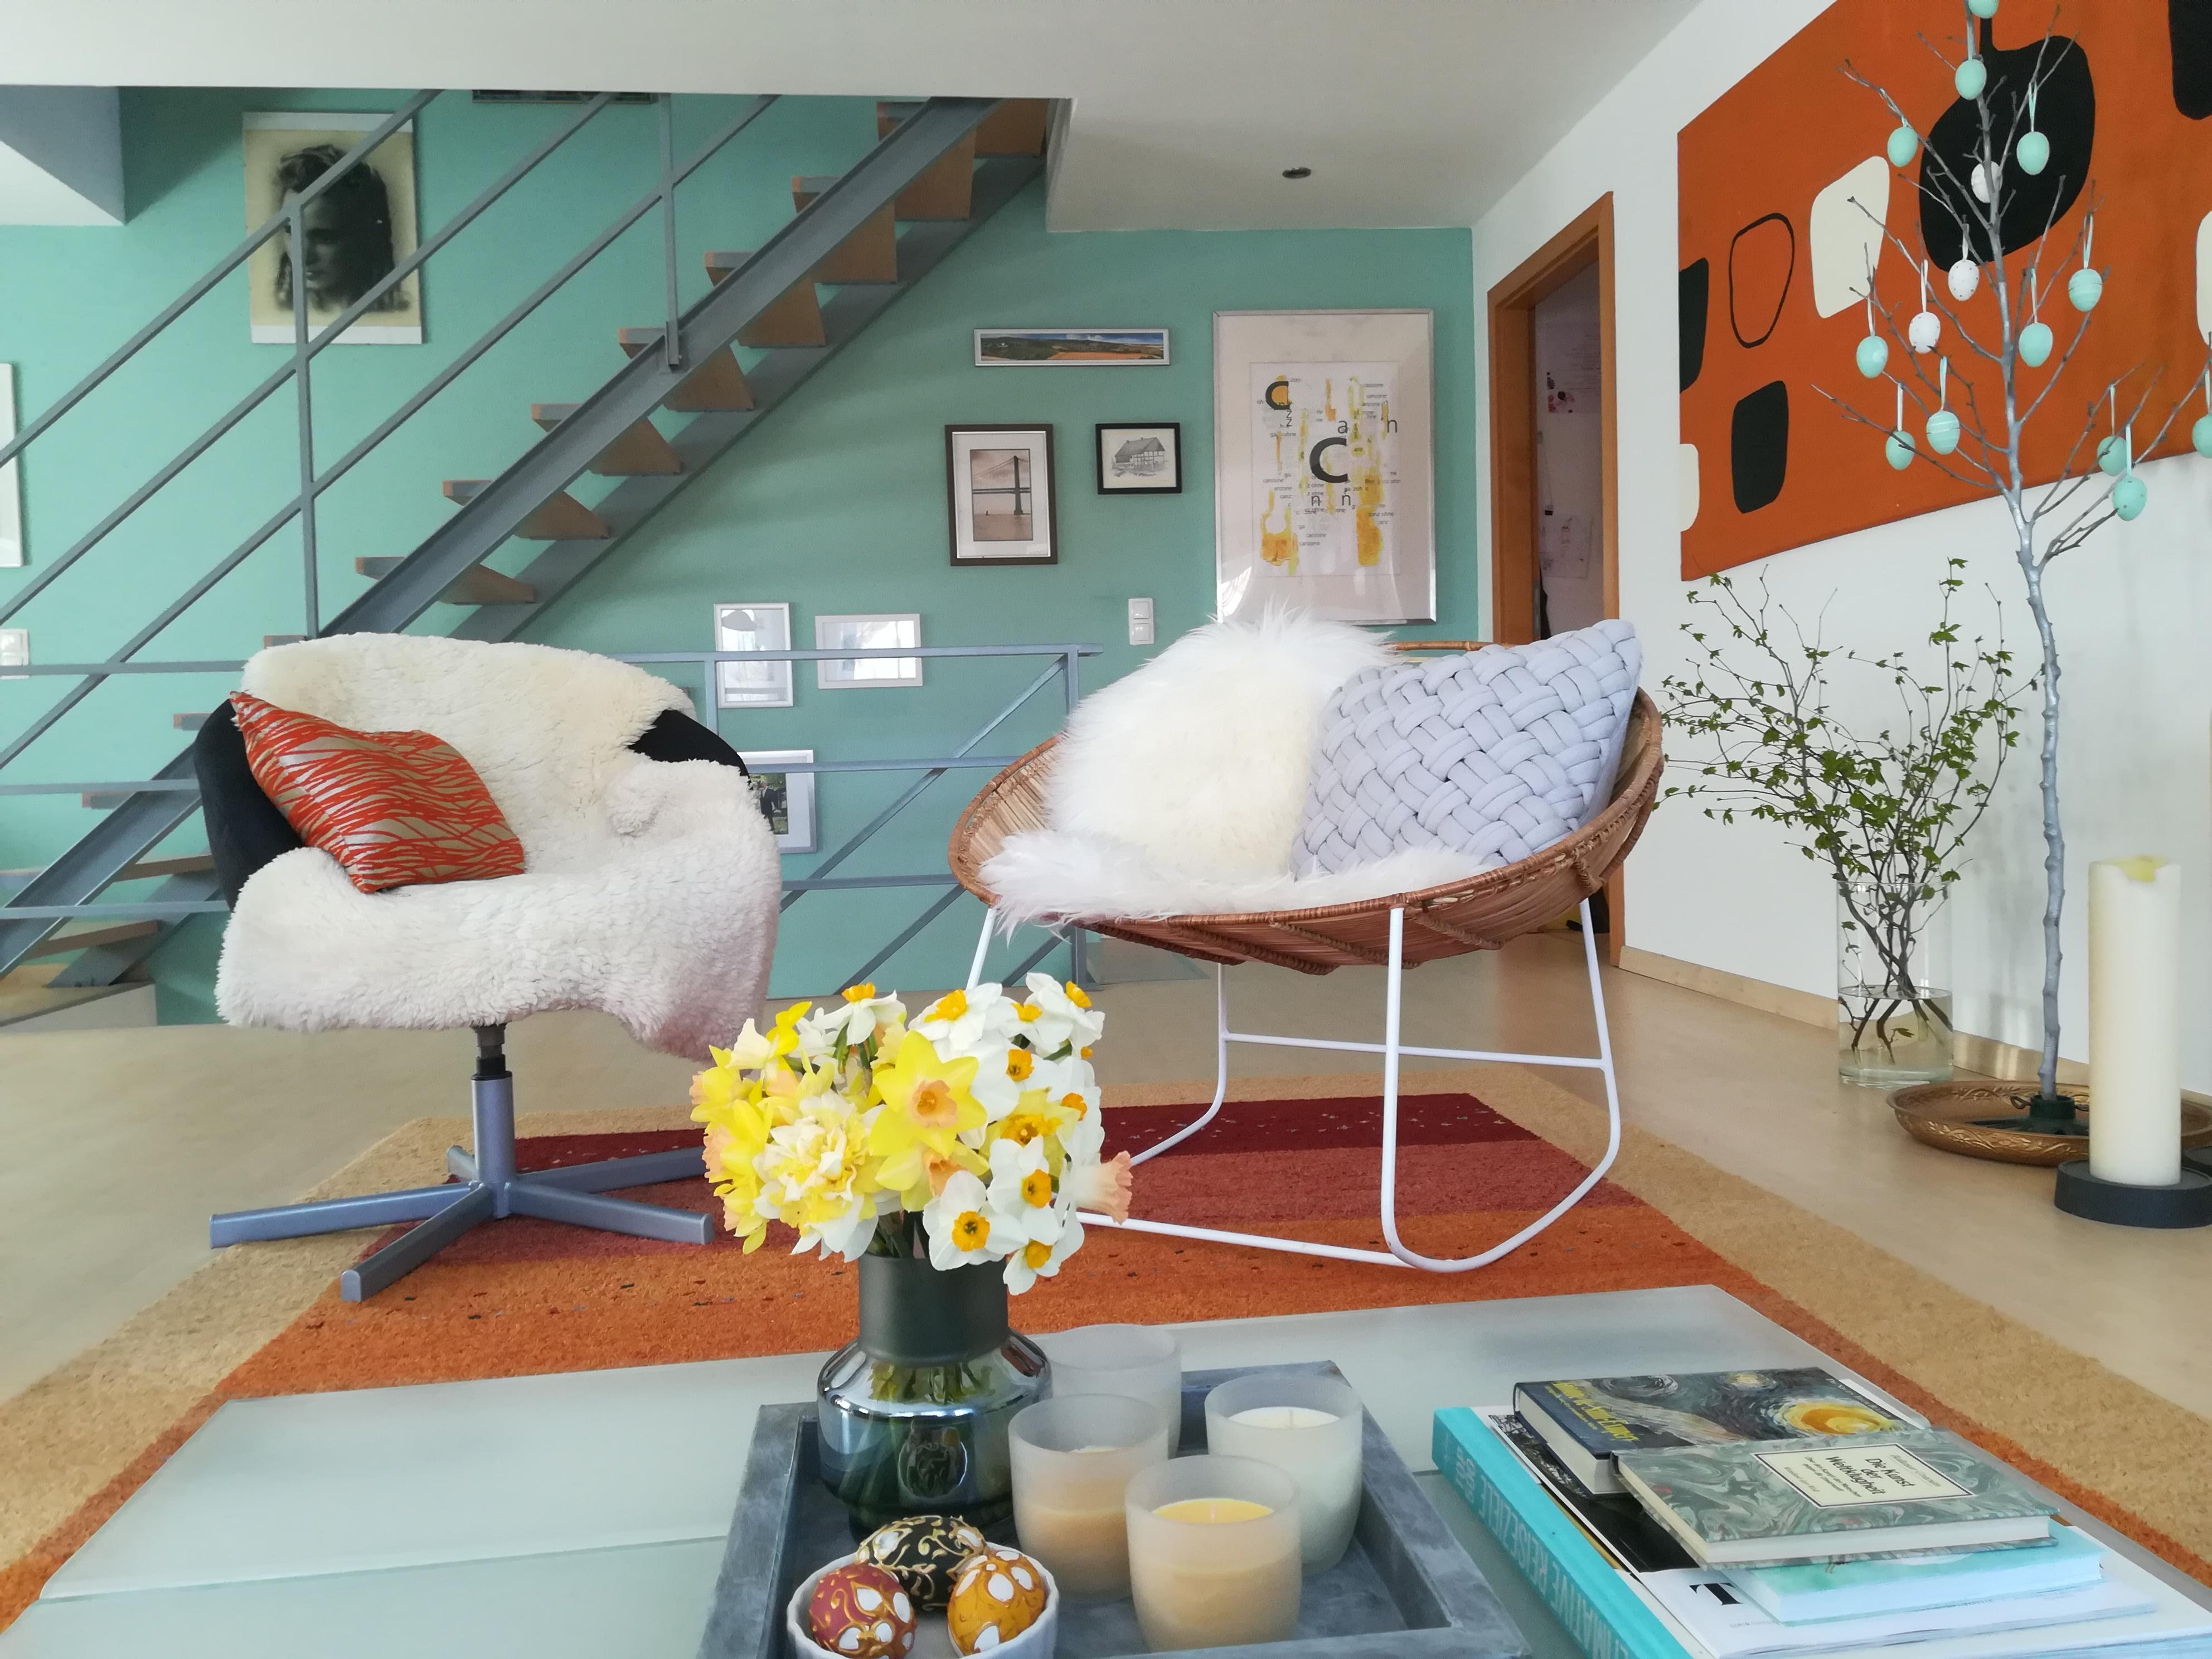 #livingroom, #Wohnzimmer, #bild, #osterdeko, #wandfarbe